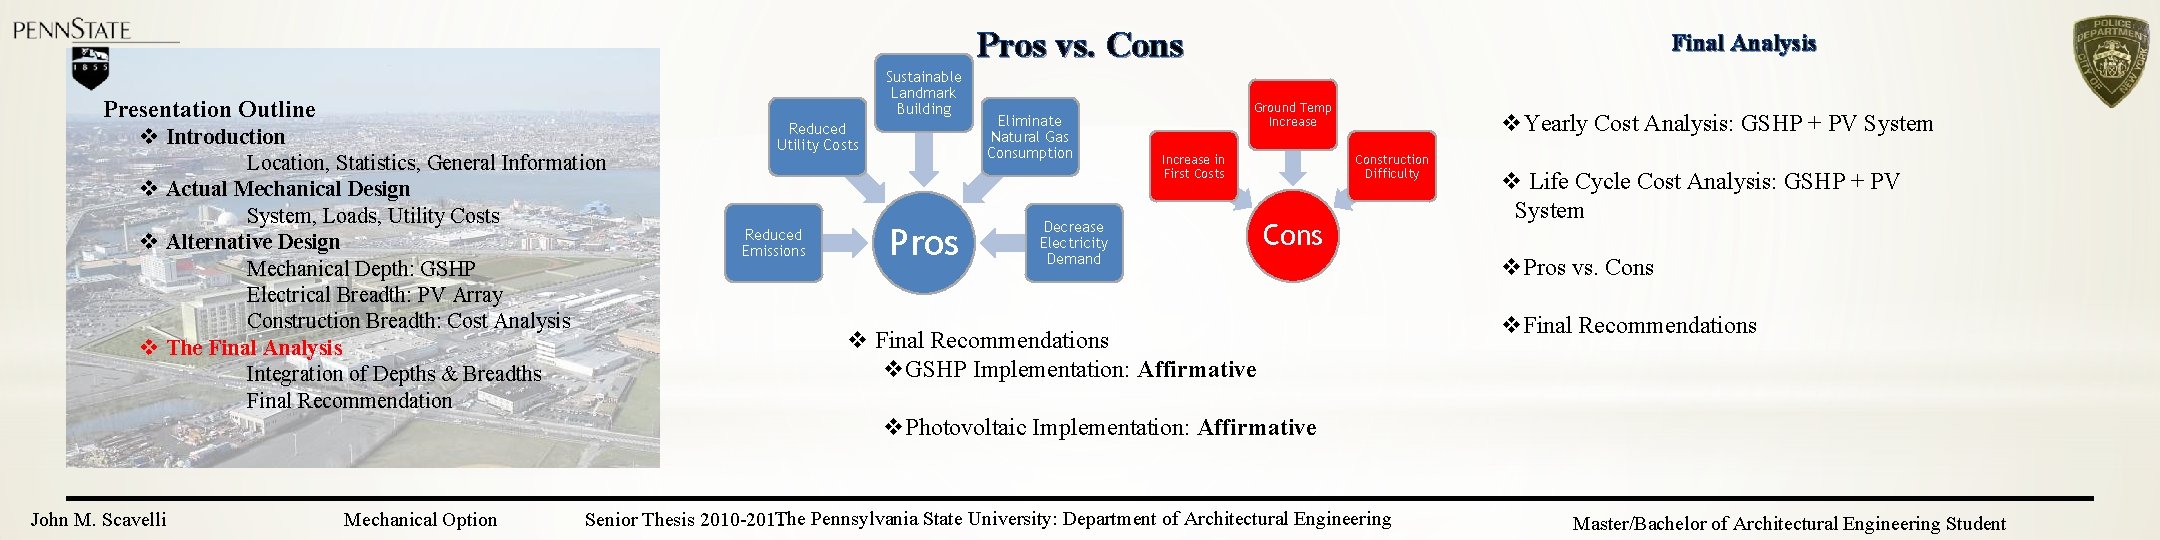 Pros vs. Cons Sustainable Landmark Building Presentation Outline v Introduction Location, Statistics, General Information